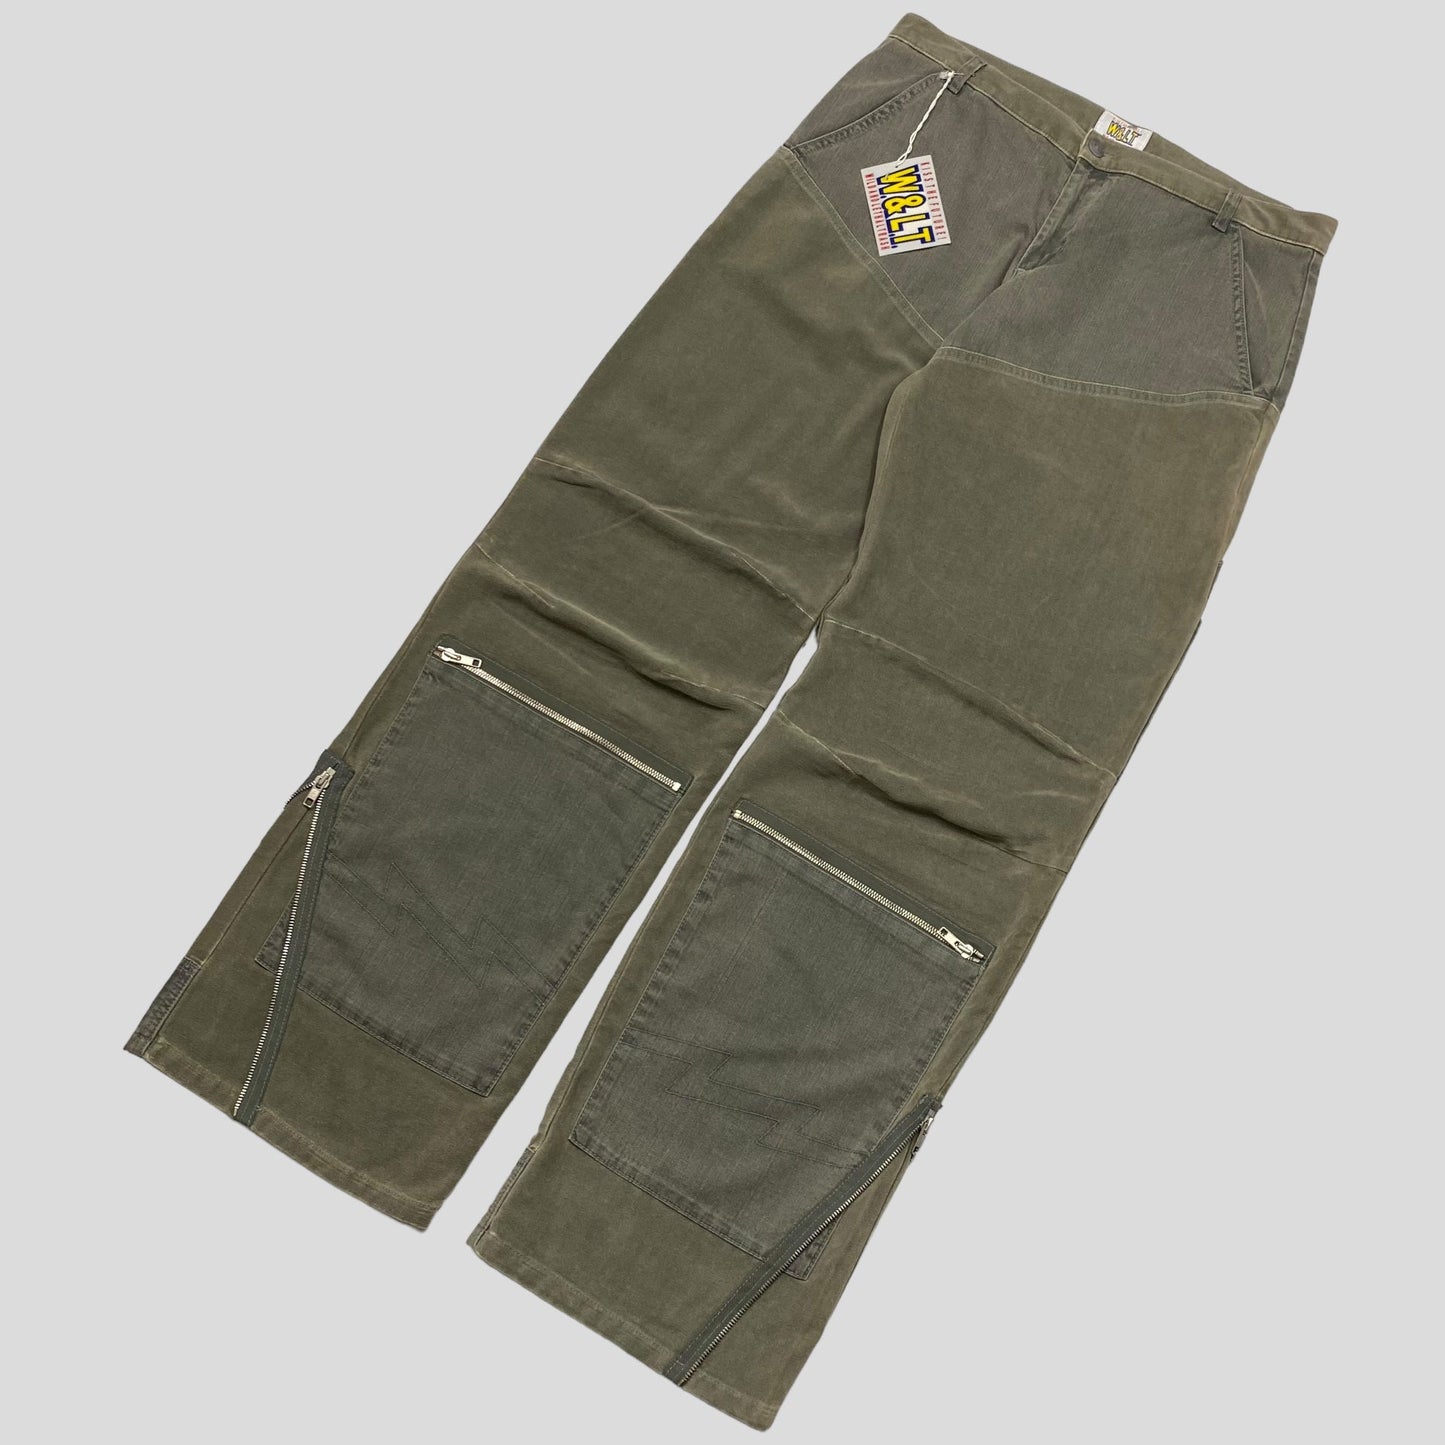 W+LT 2003 Heat Reactive Panelled Carpenter Jeans - 34-36